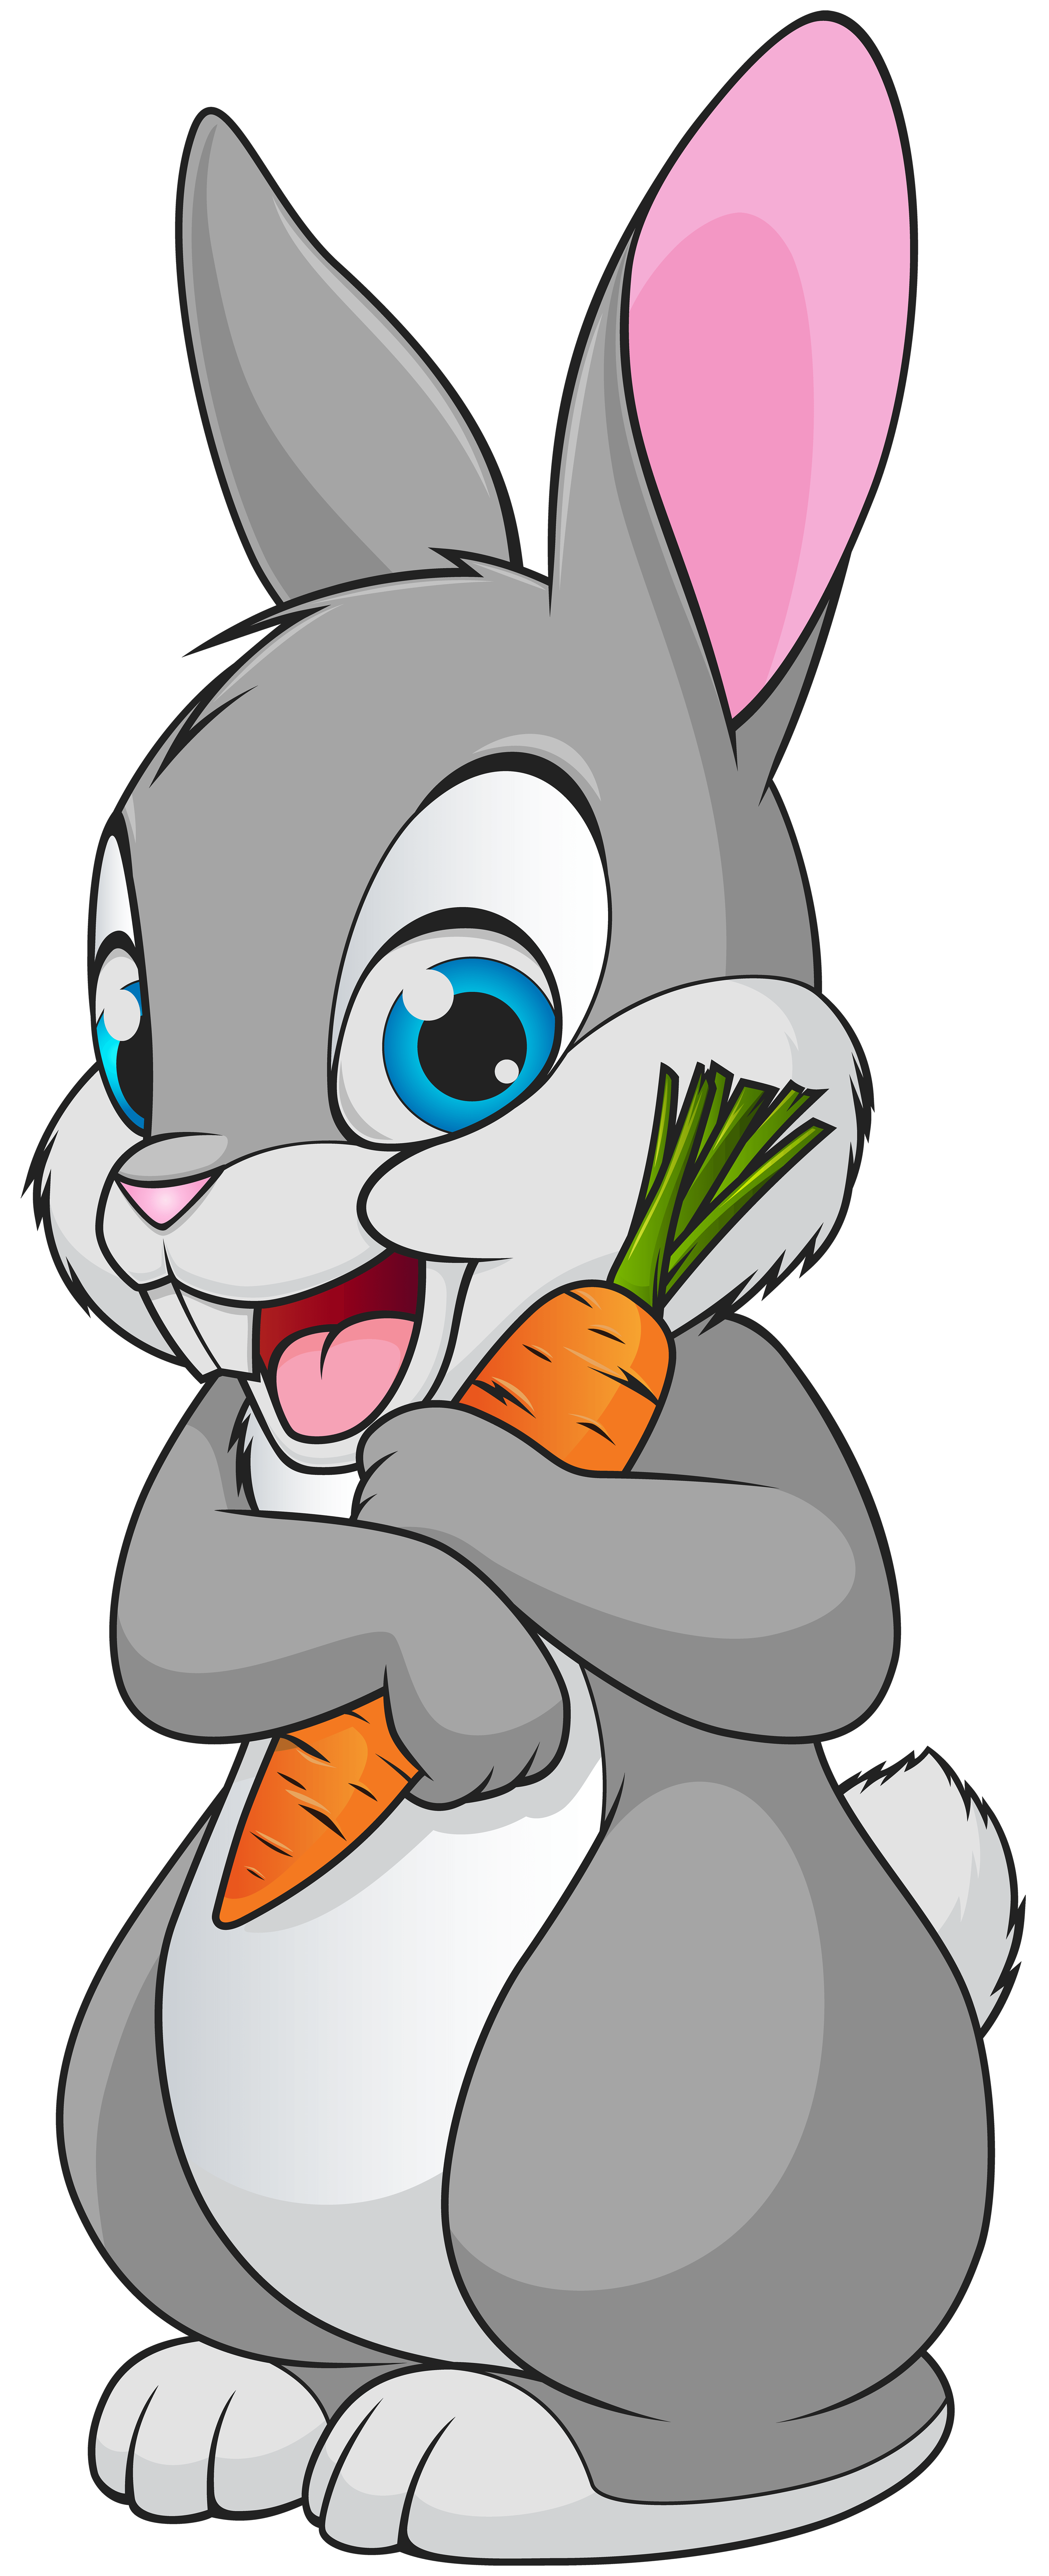 Cute Cartoon Bunny Wallpapers - Top Free Cute Cartoon Bunny Backgrounds ...